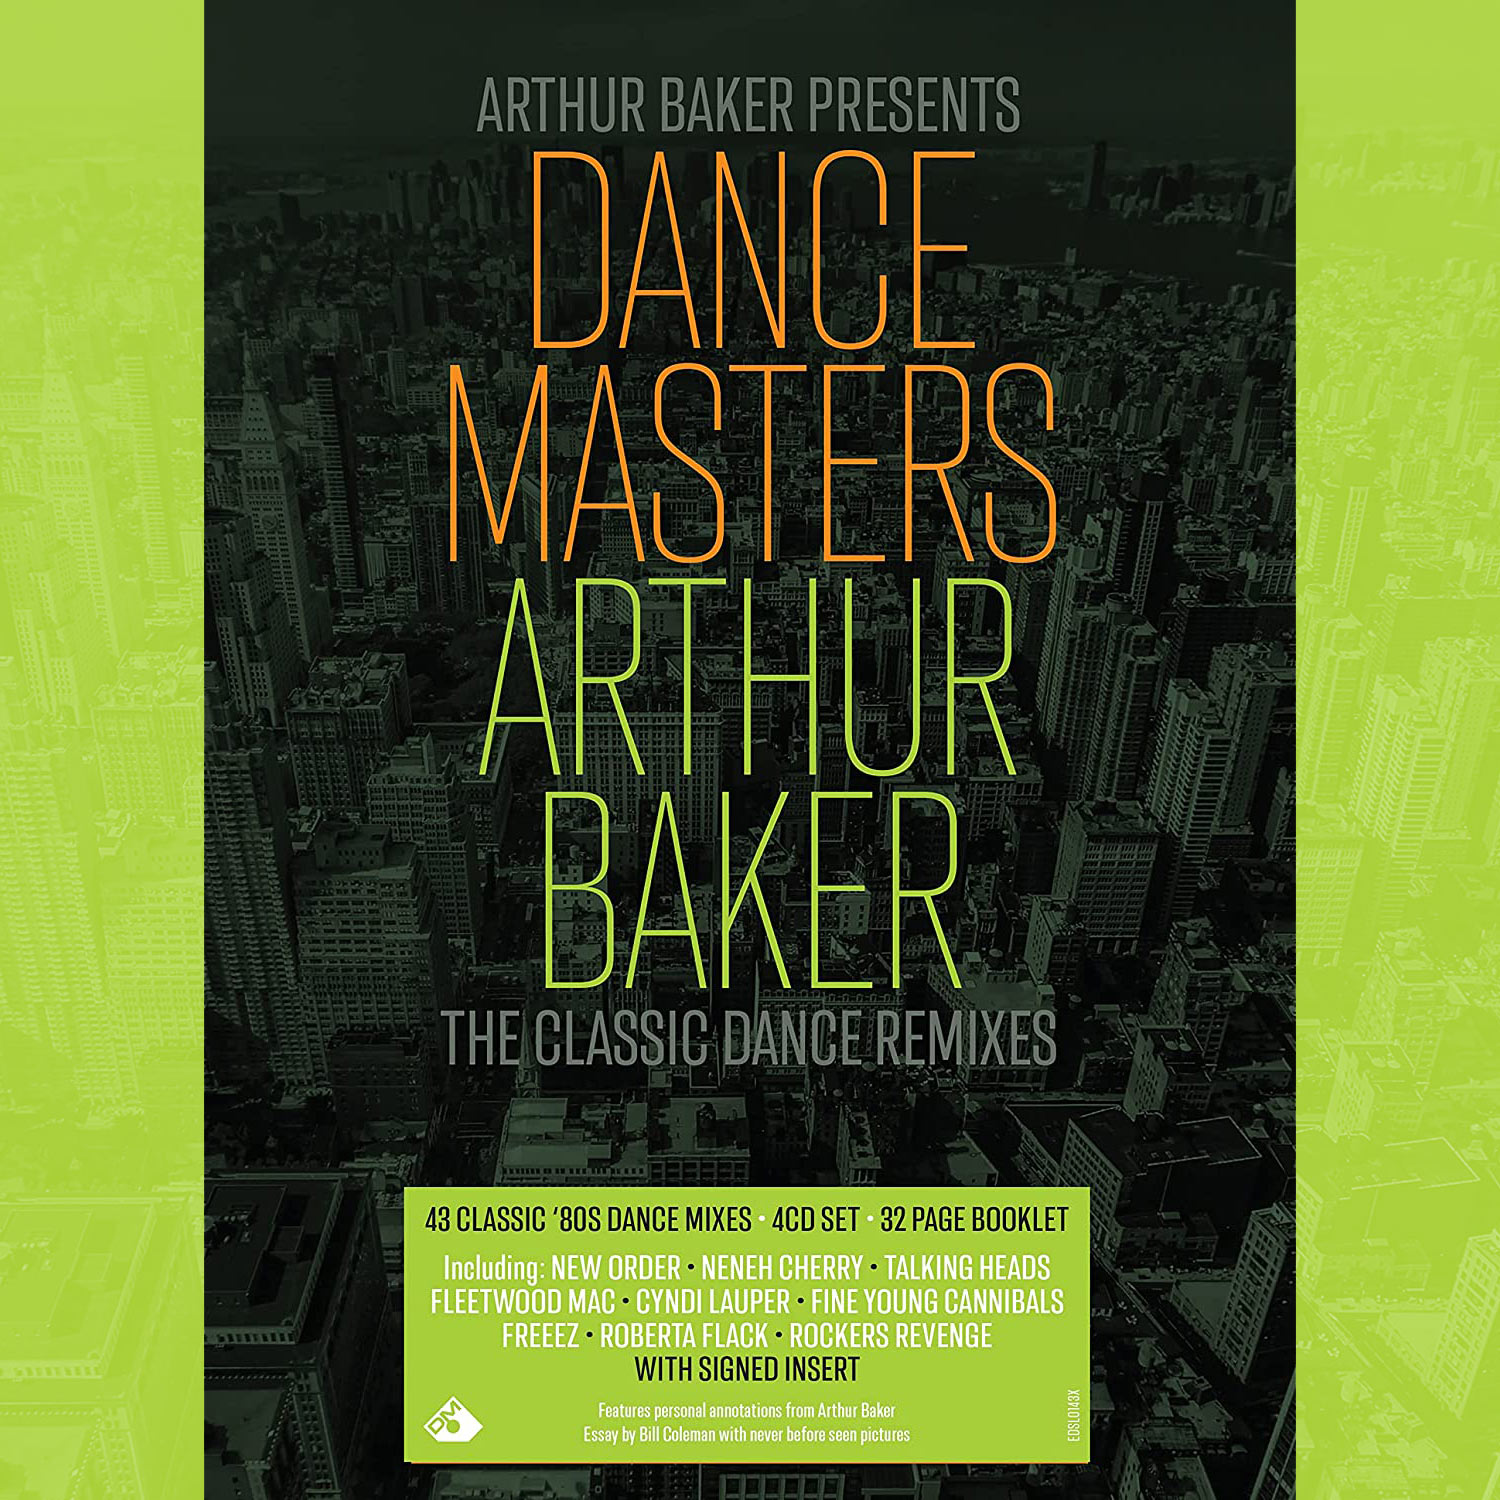 Arthur Baker Presents DANCE MASTERS: Arthur Baker - The Classic Dance Remixes